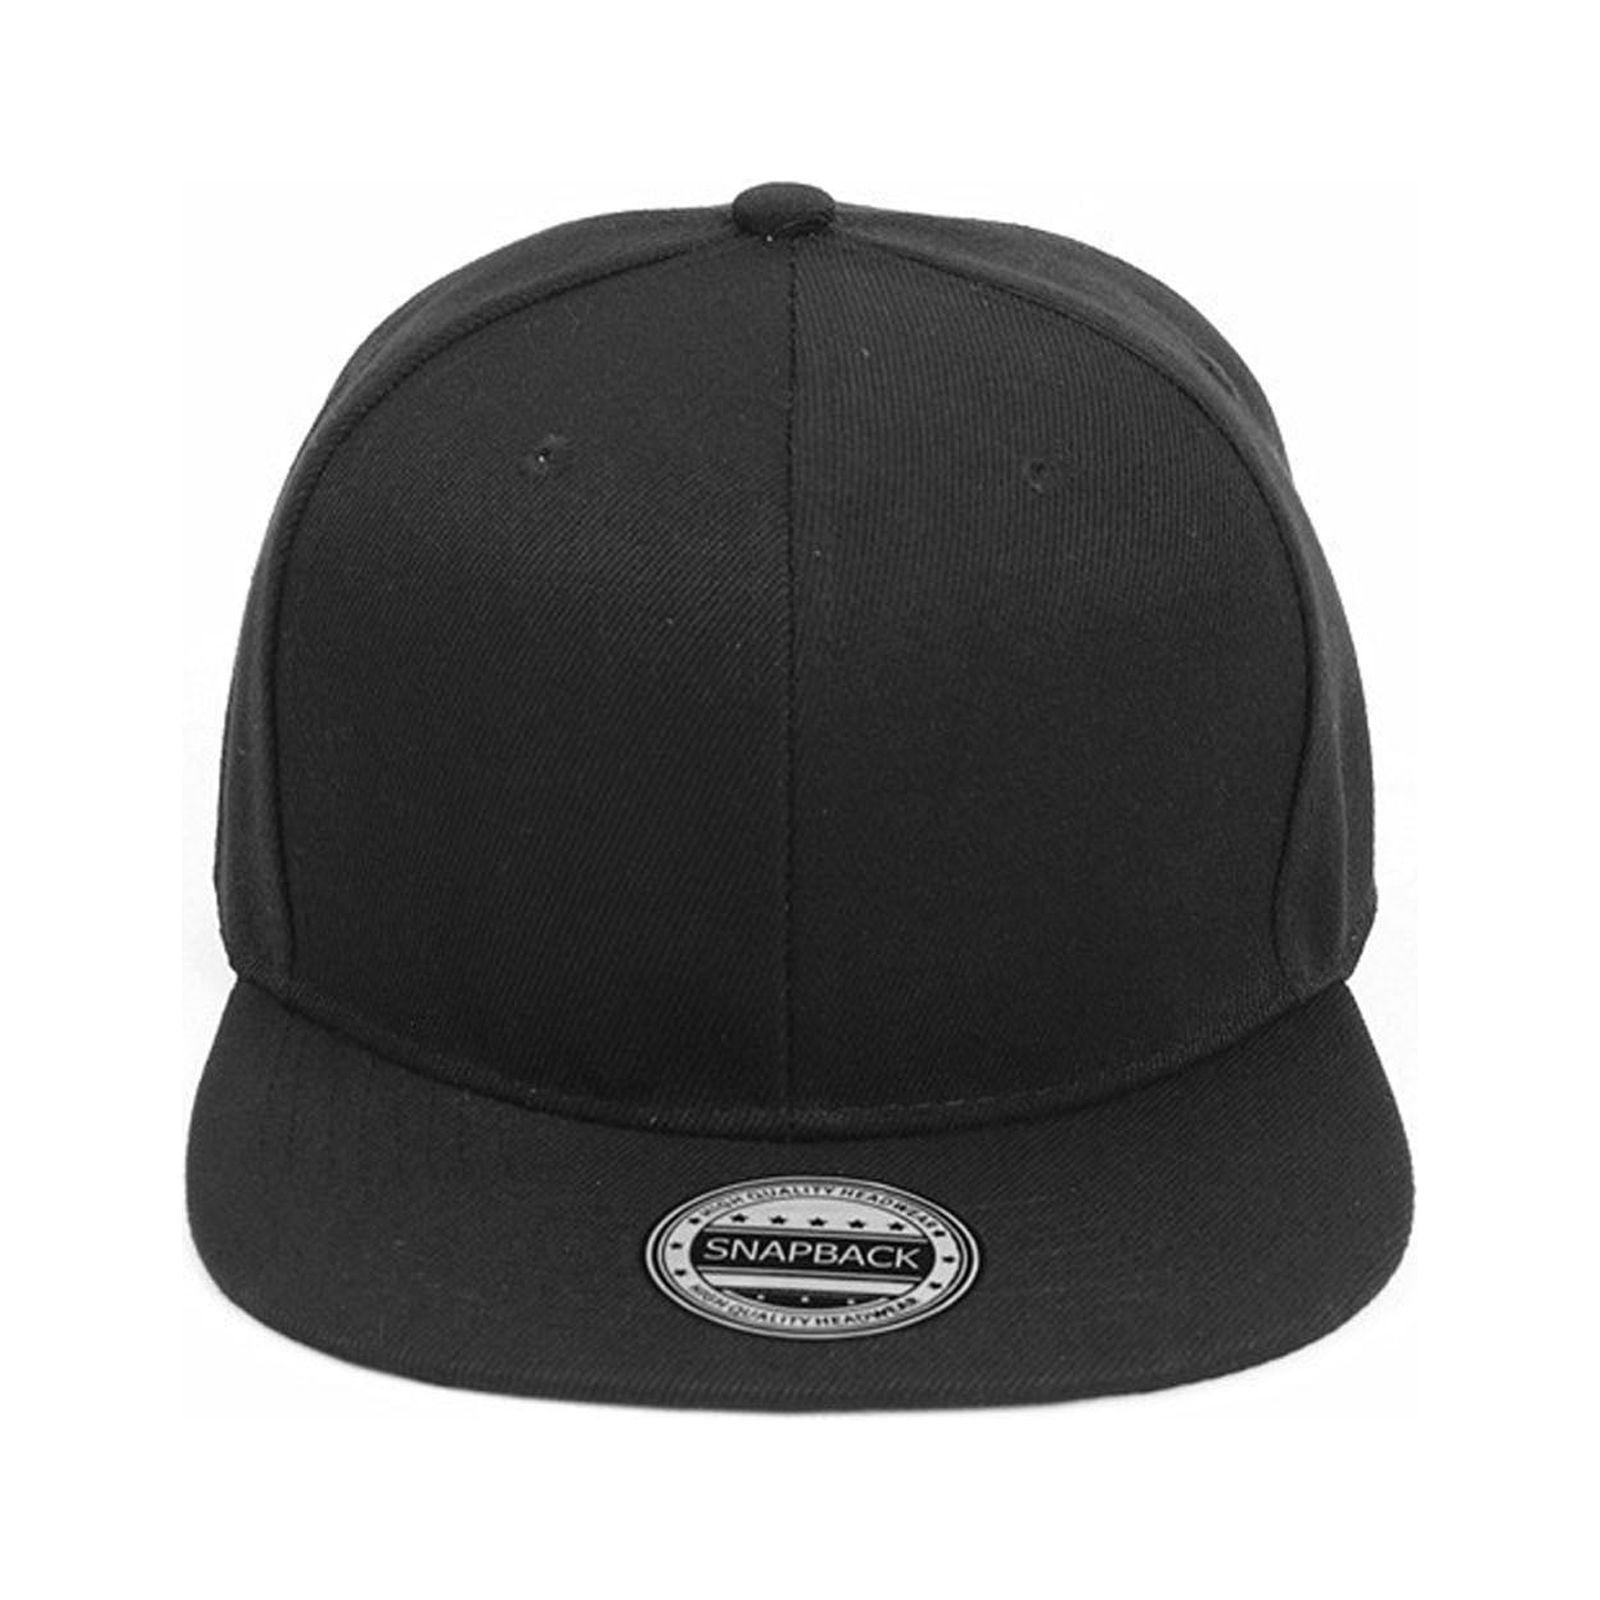 Adjustable Fitted Snapback Hats For Men True Fit Hip Hop Trucker